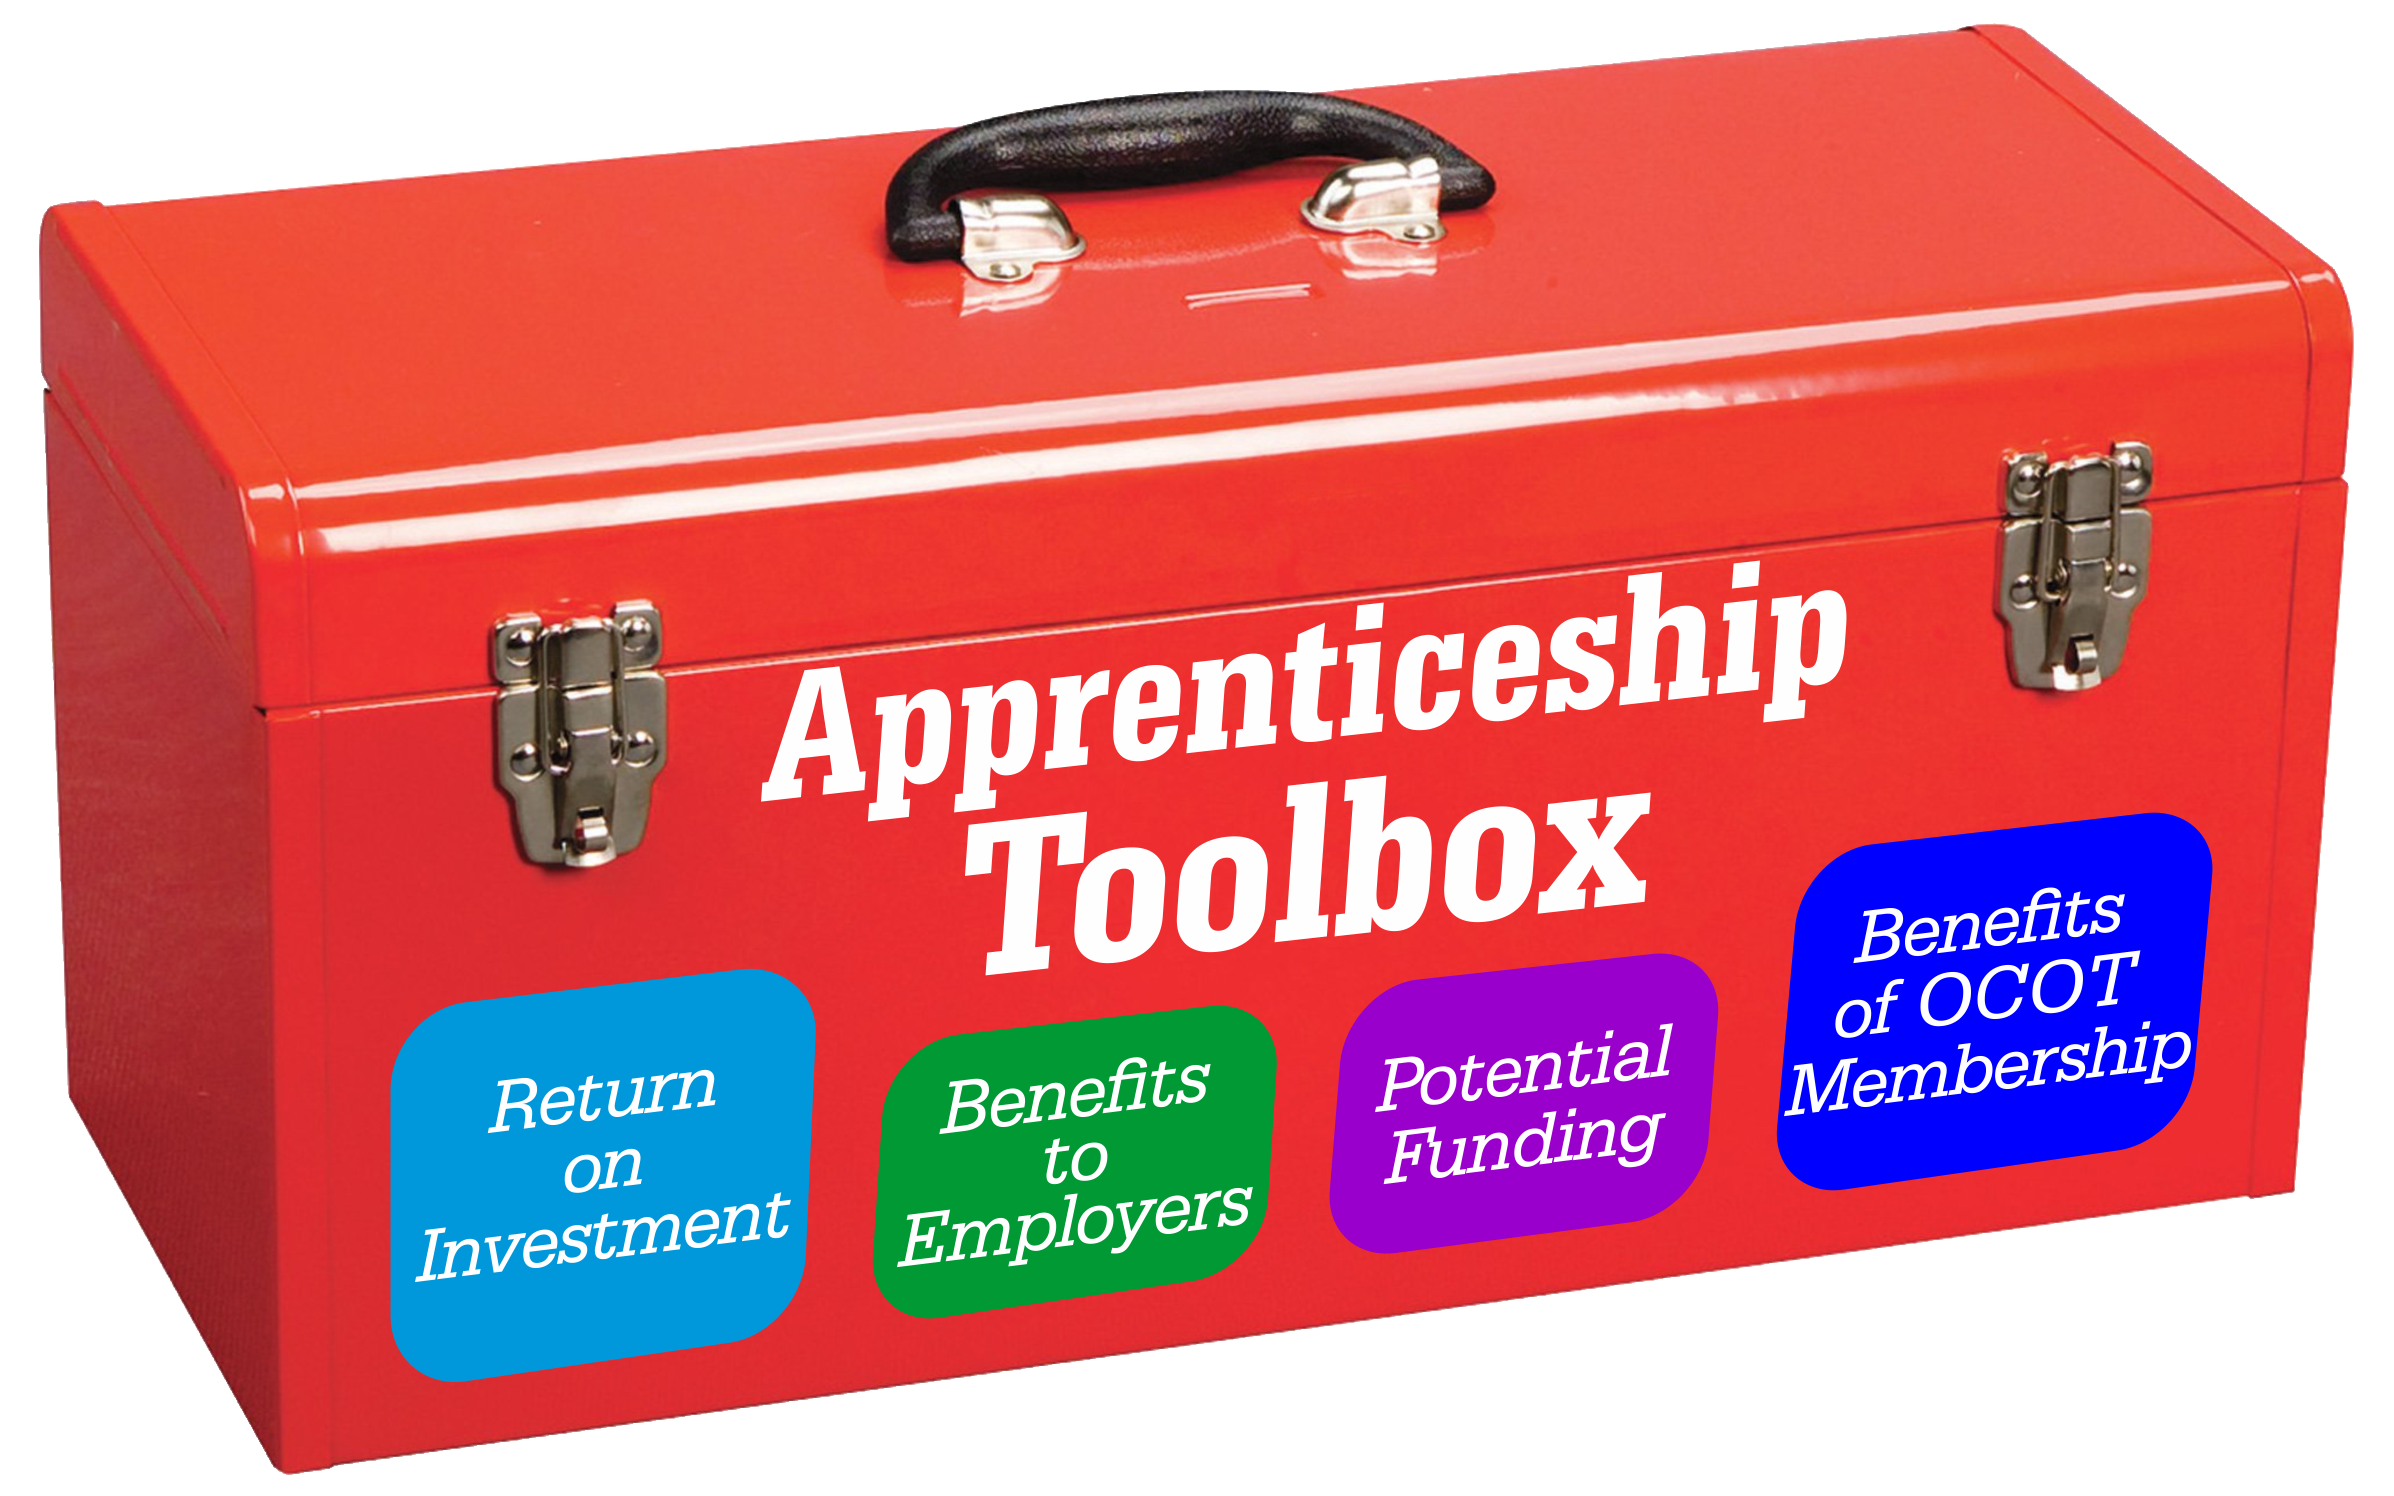 Apprenticeship Toolbox